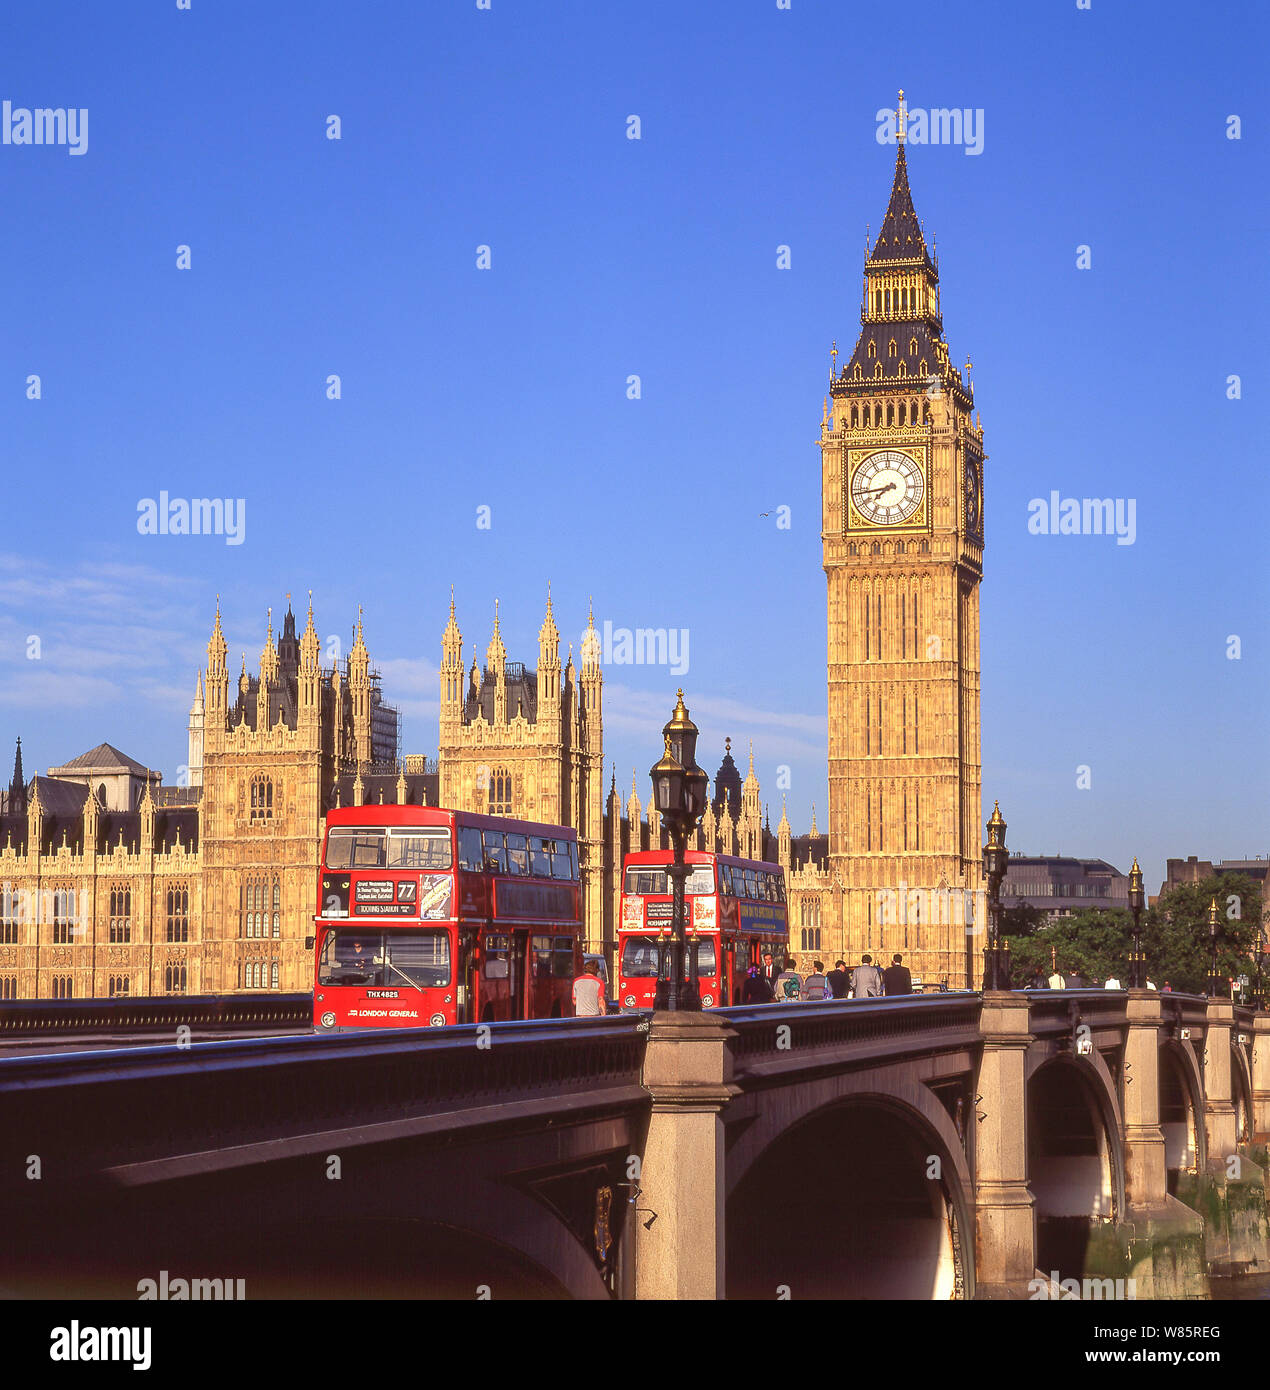 Der Palace of Westminster (Houses of Parliament) über der Themse, City of Westminster, London, England, Vereinigtes Königreich Stockfoto